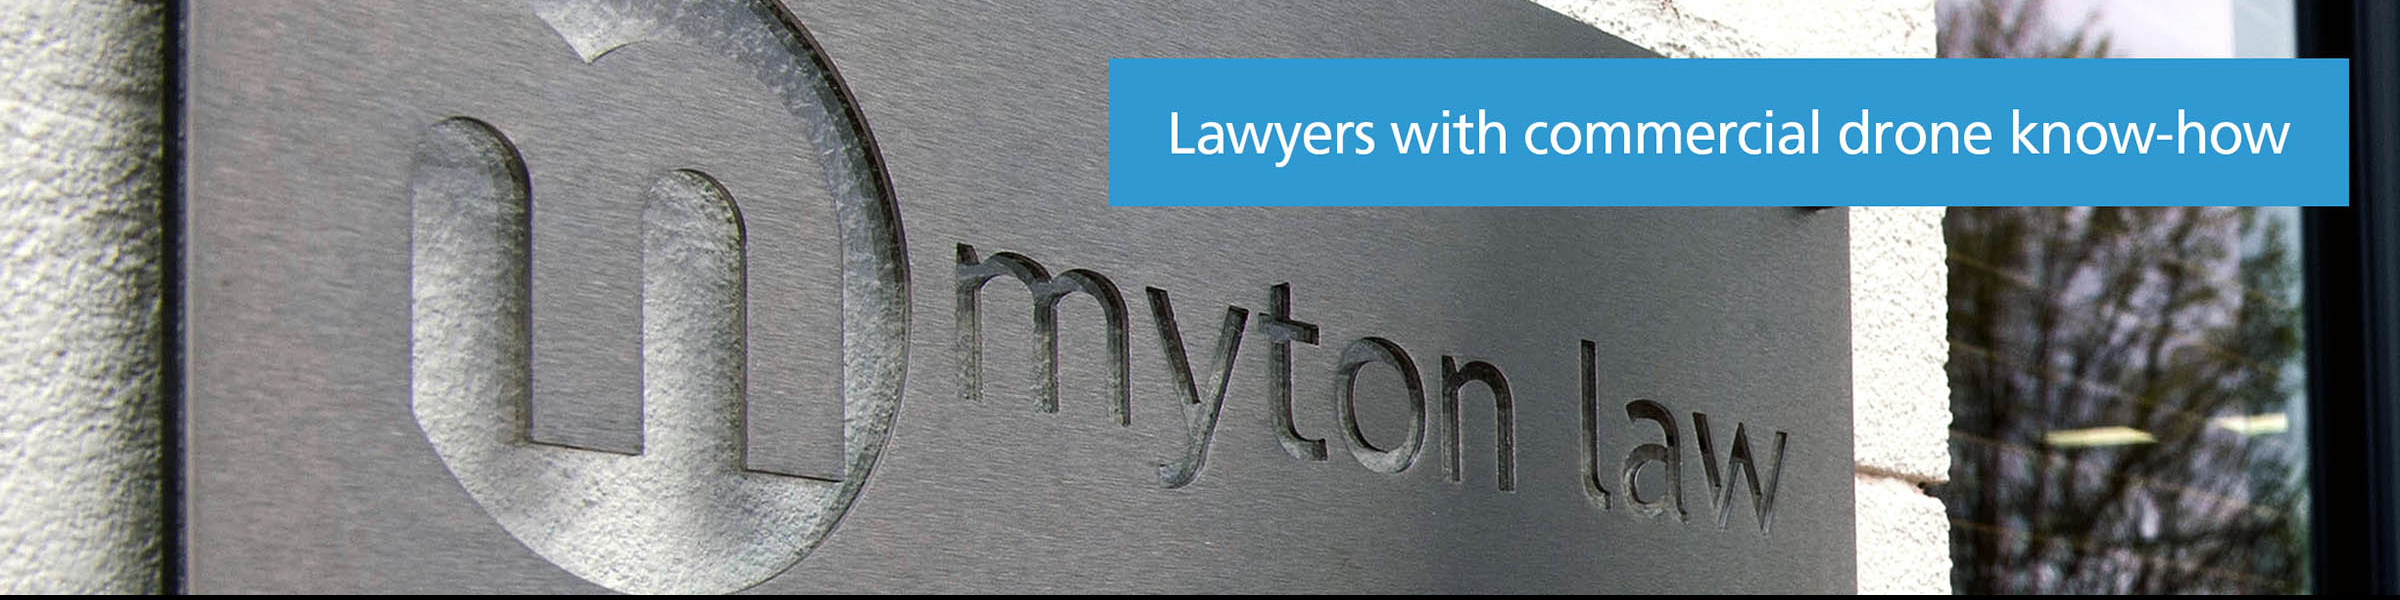 Myton Law banner